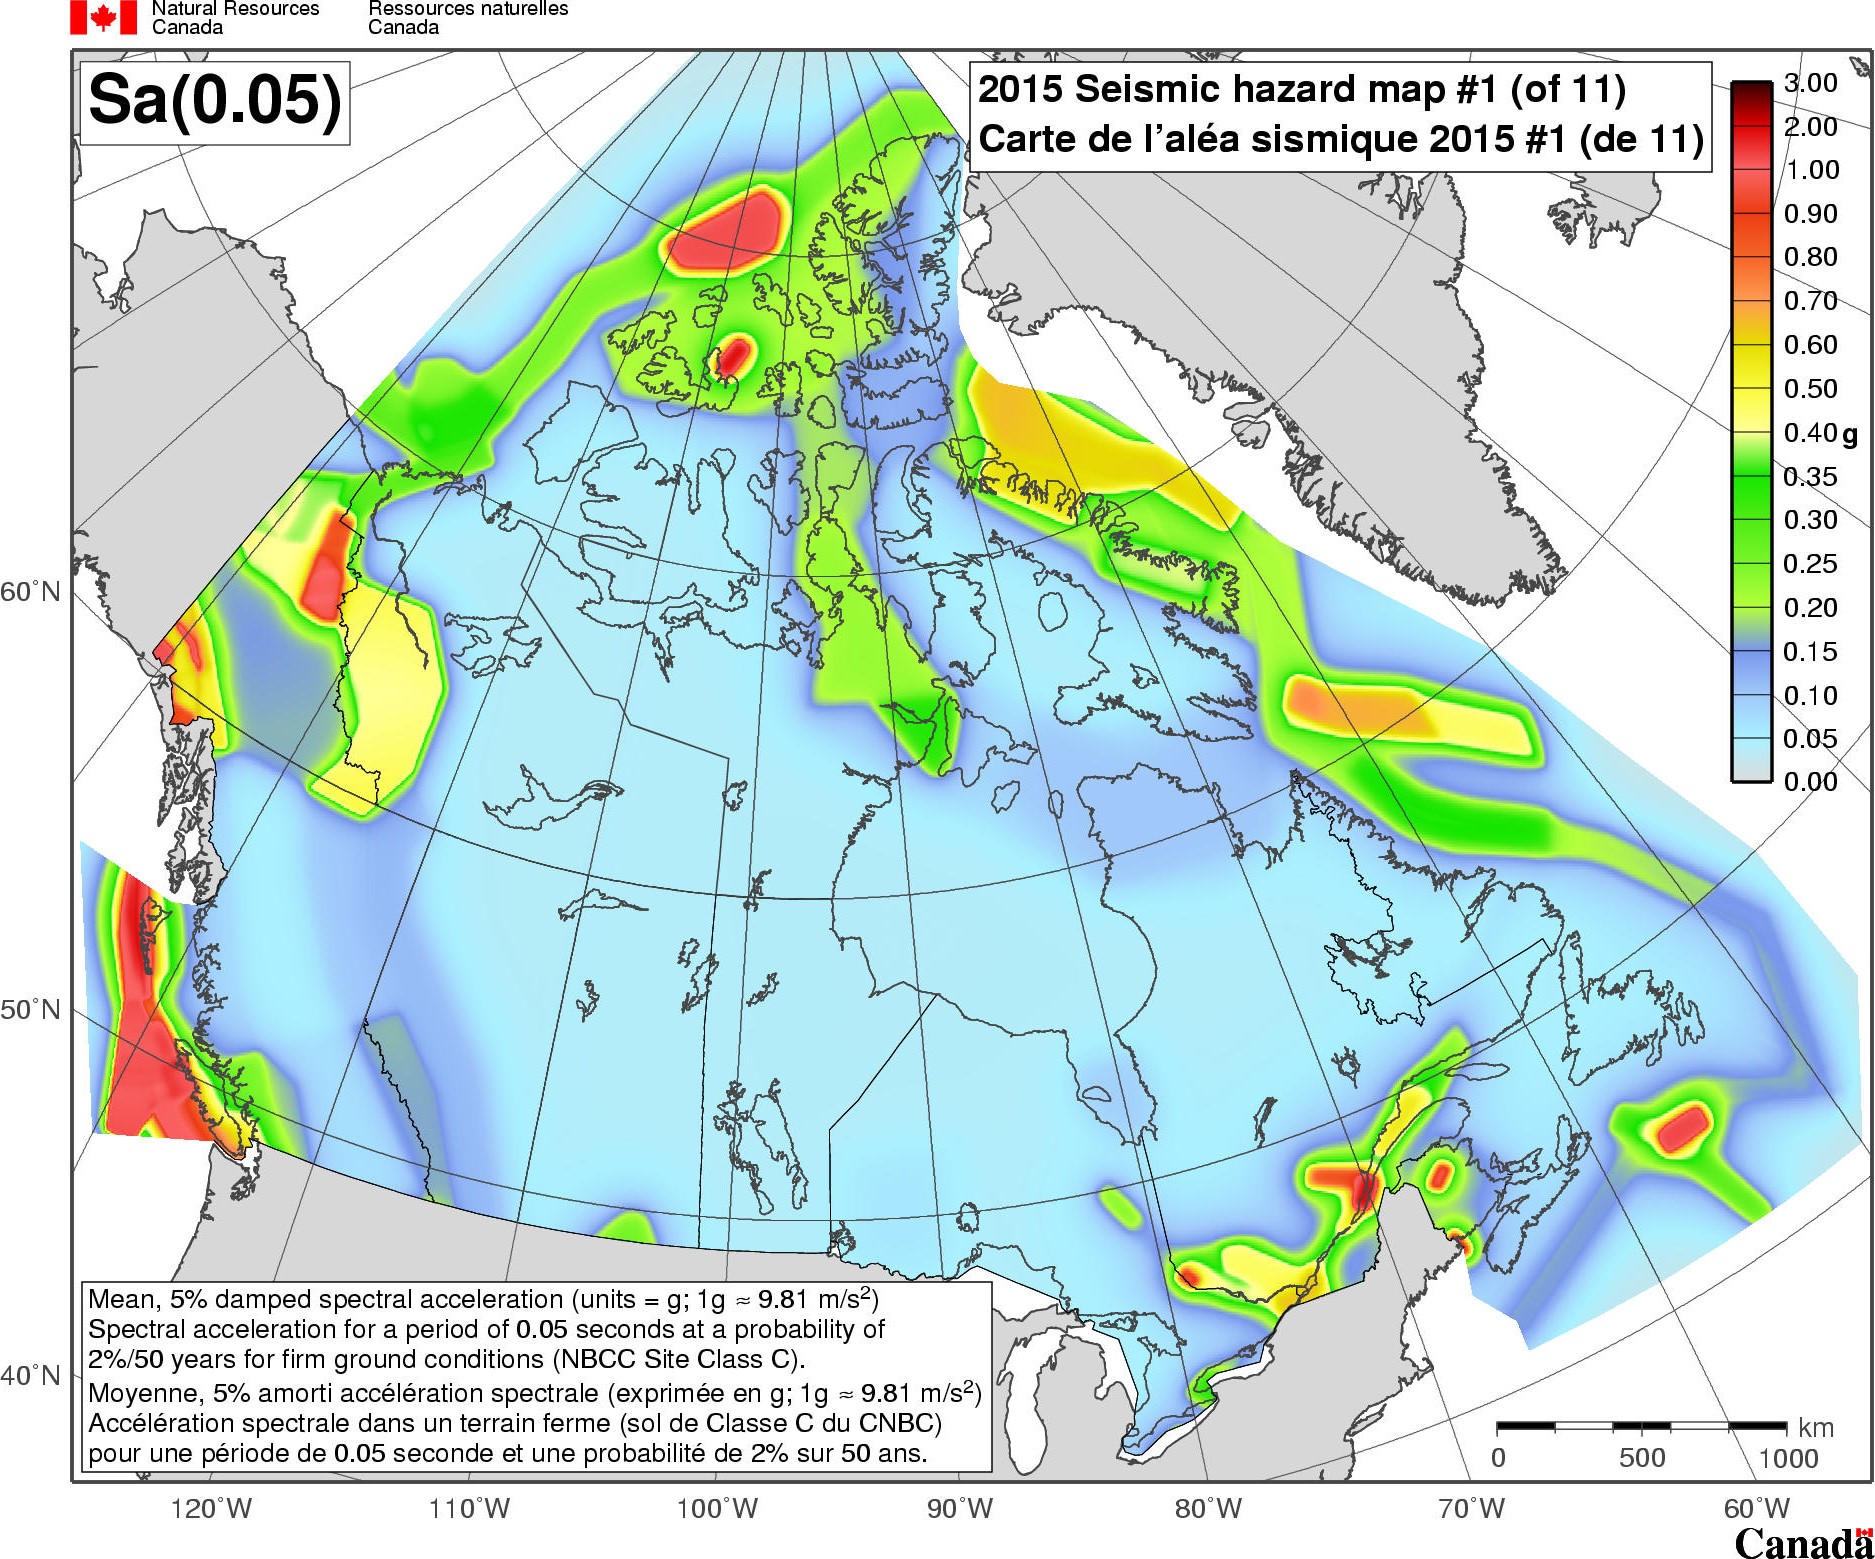 2015 NBCC seismic hazard map - Sa(0.05)